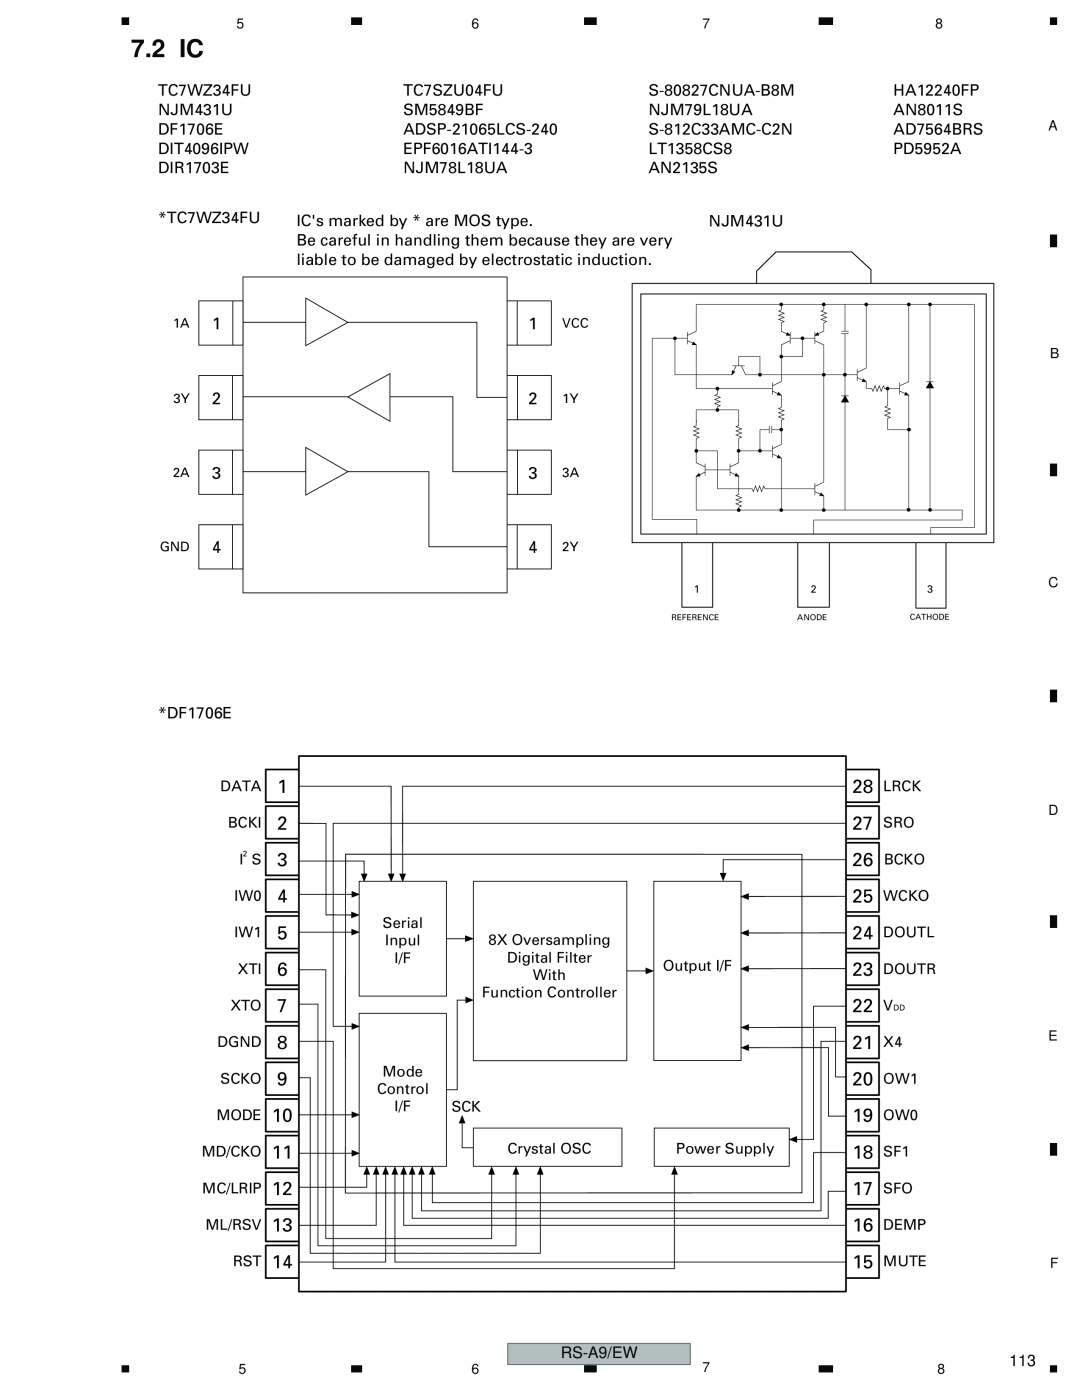 Pioneer RS-A9/EW manual 7.2 IC, 1 2 3 4 5 6 7 8 9 10 11 12 13 14 